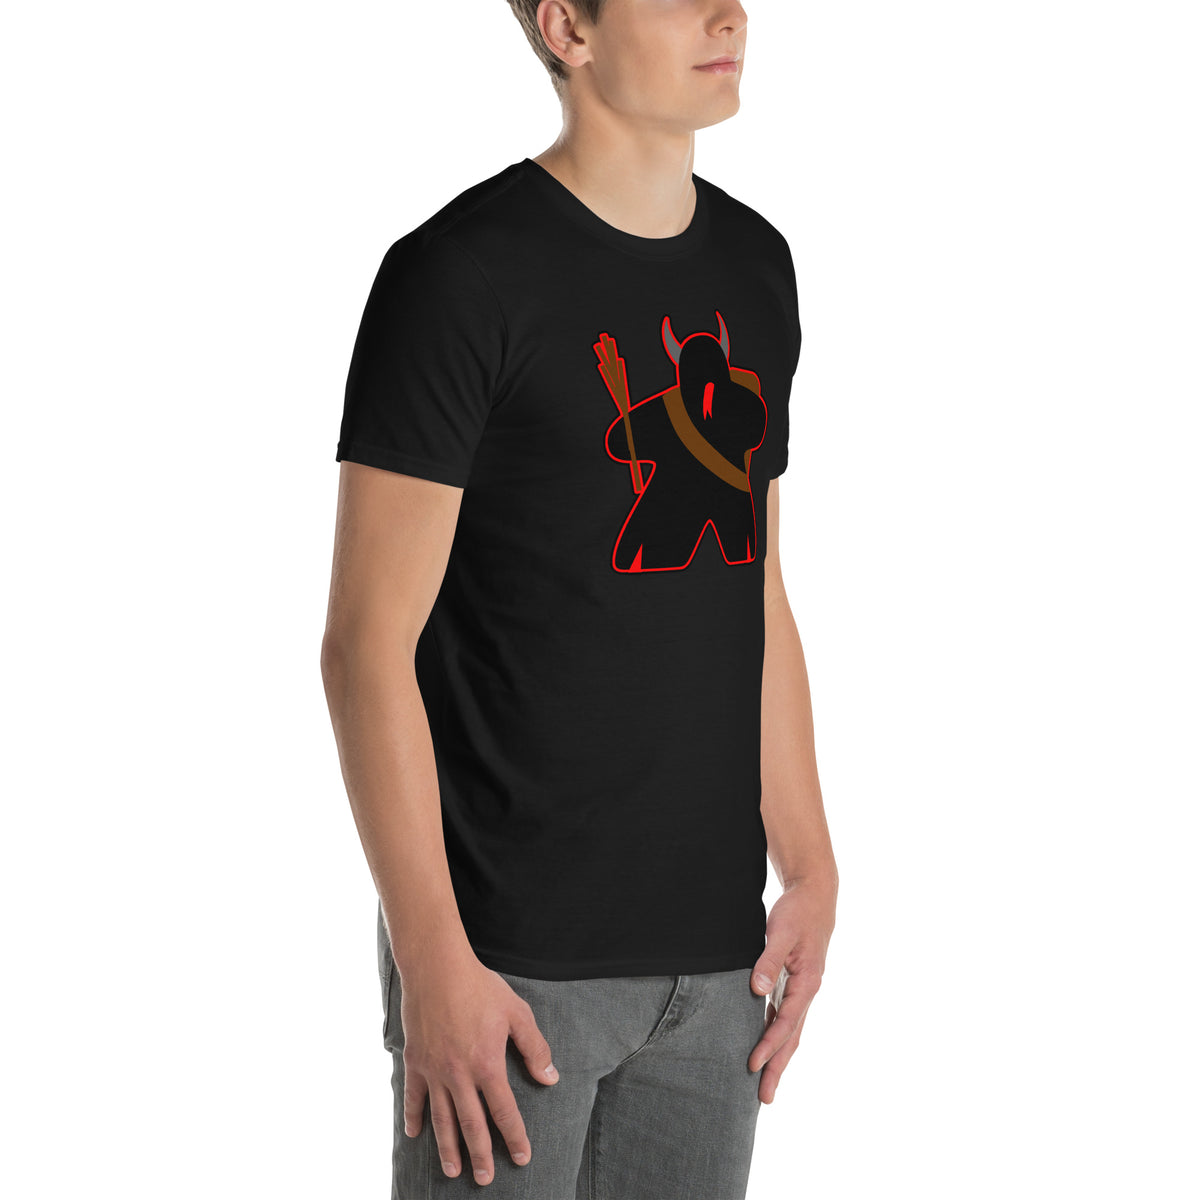 Krampus Meeple on Black T-Shirt Worn by Model